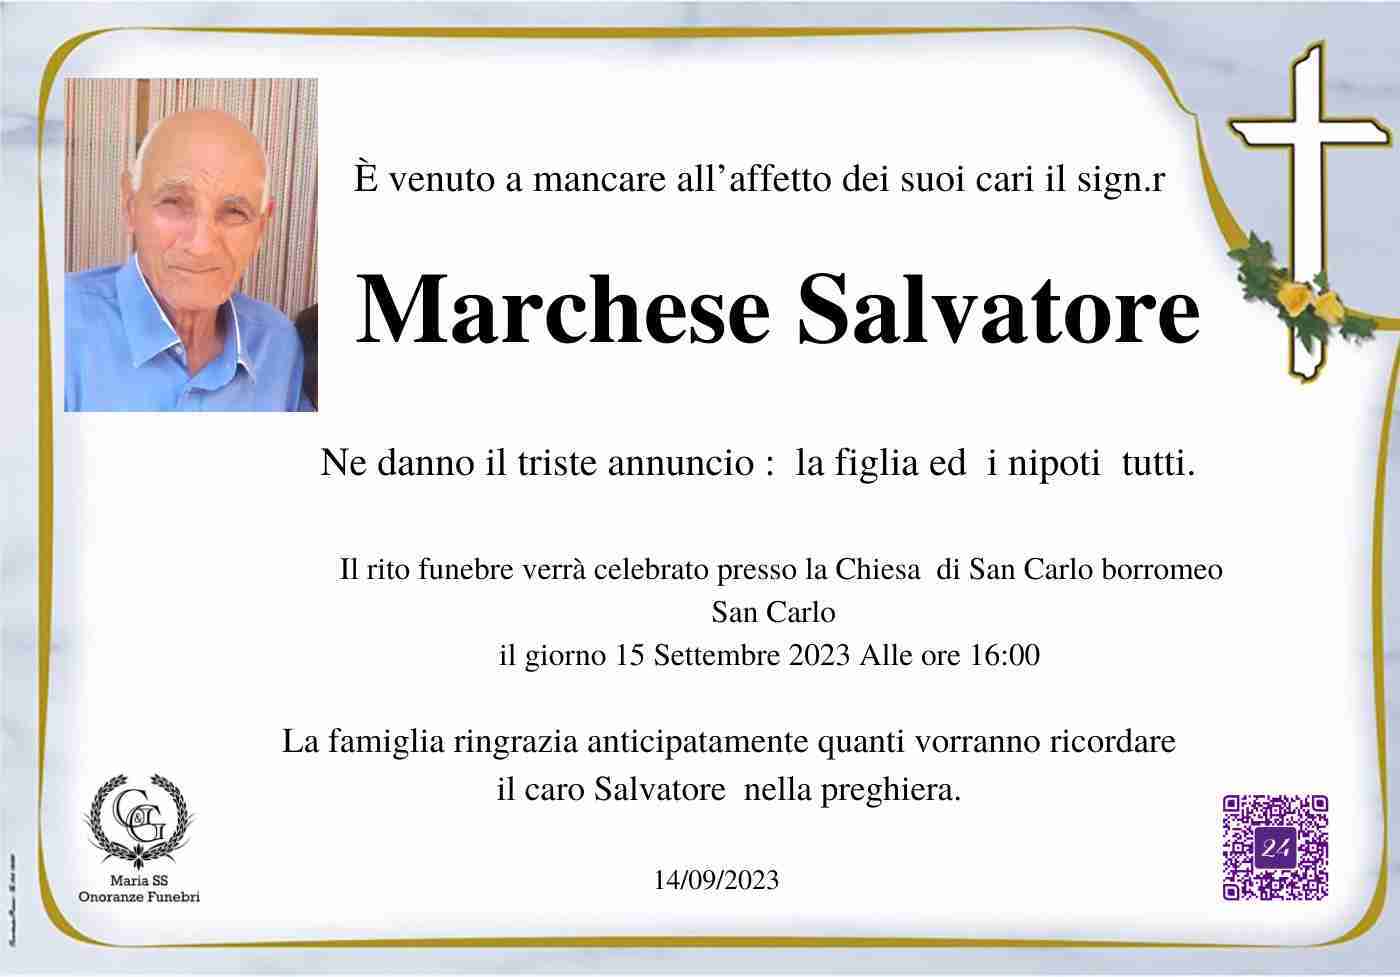 Salvatore Marchese